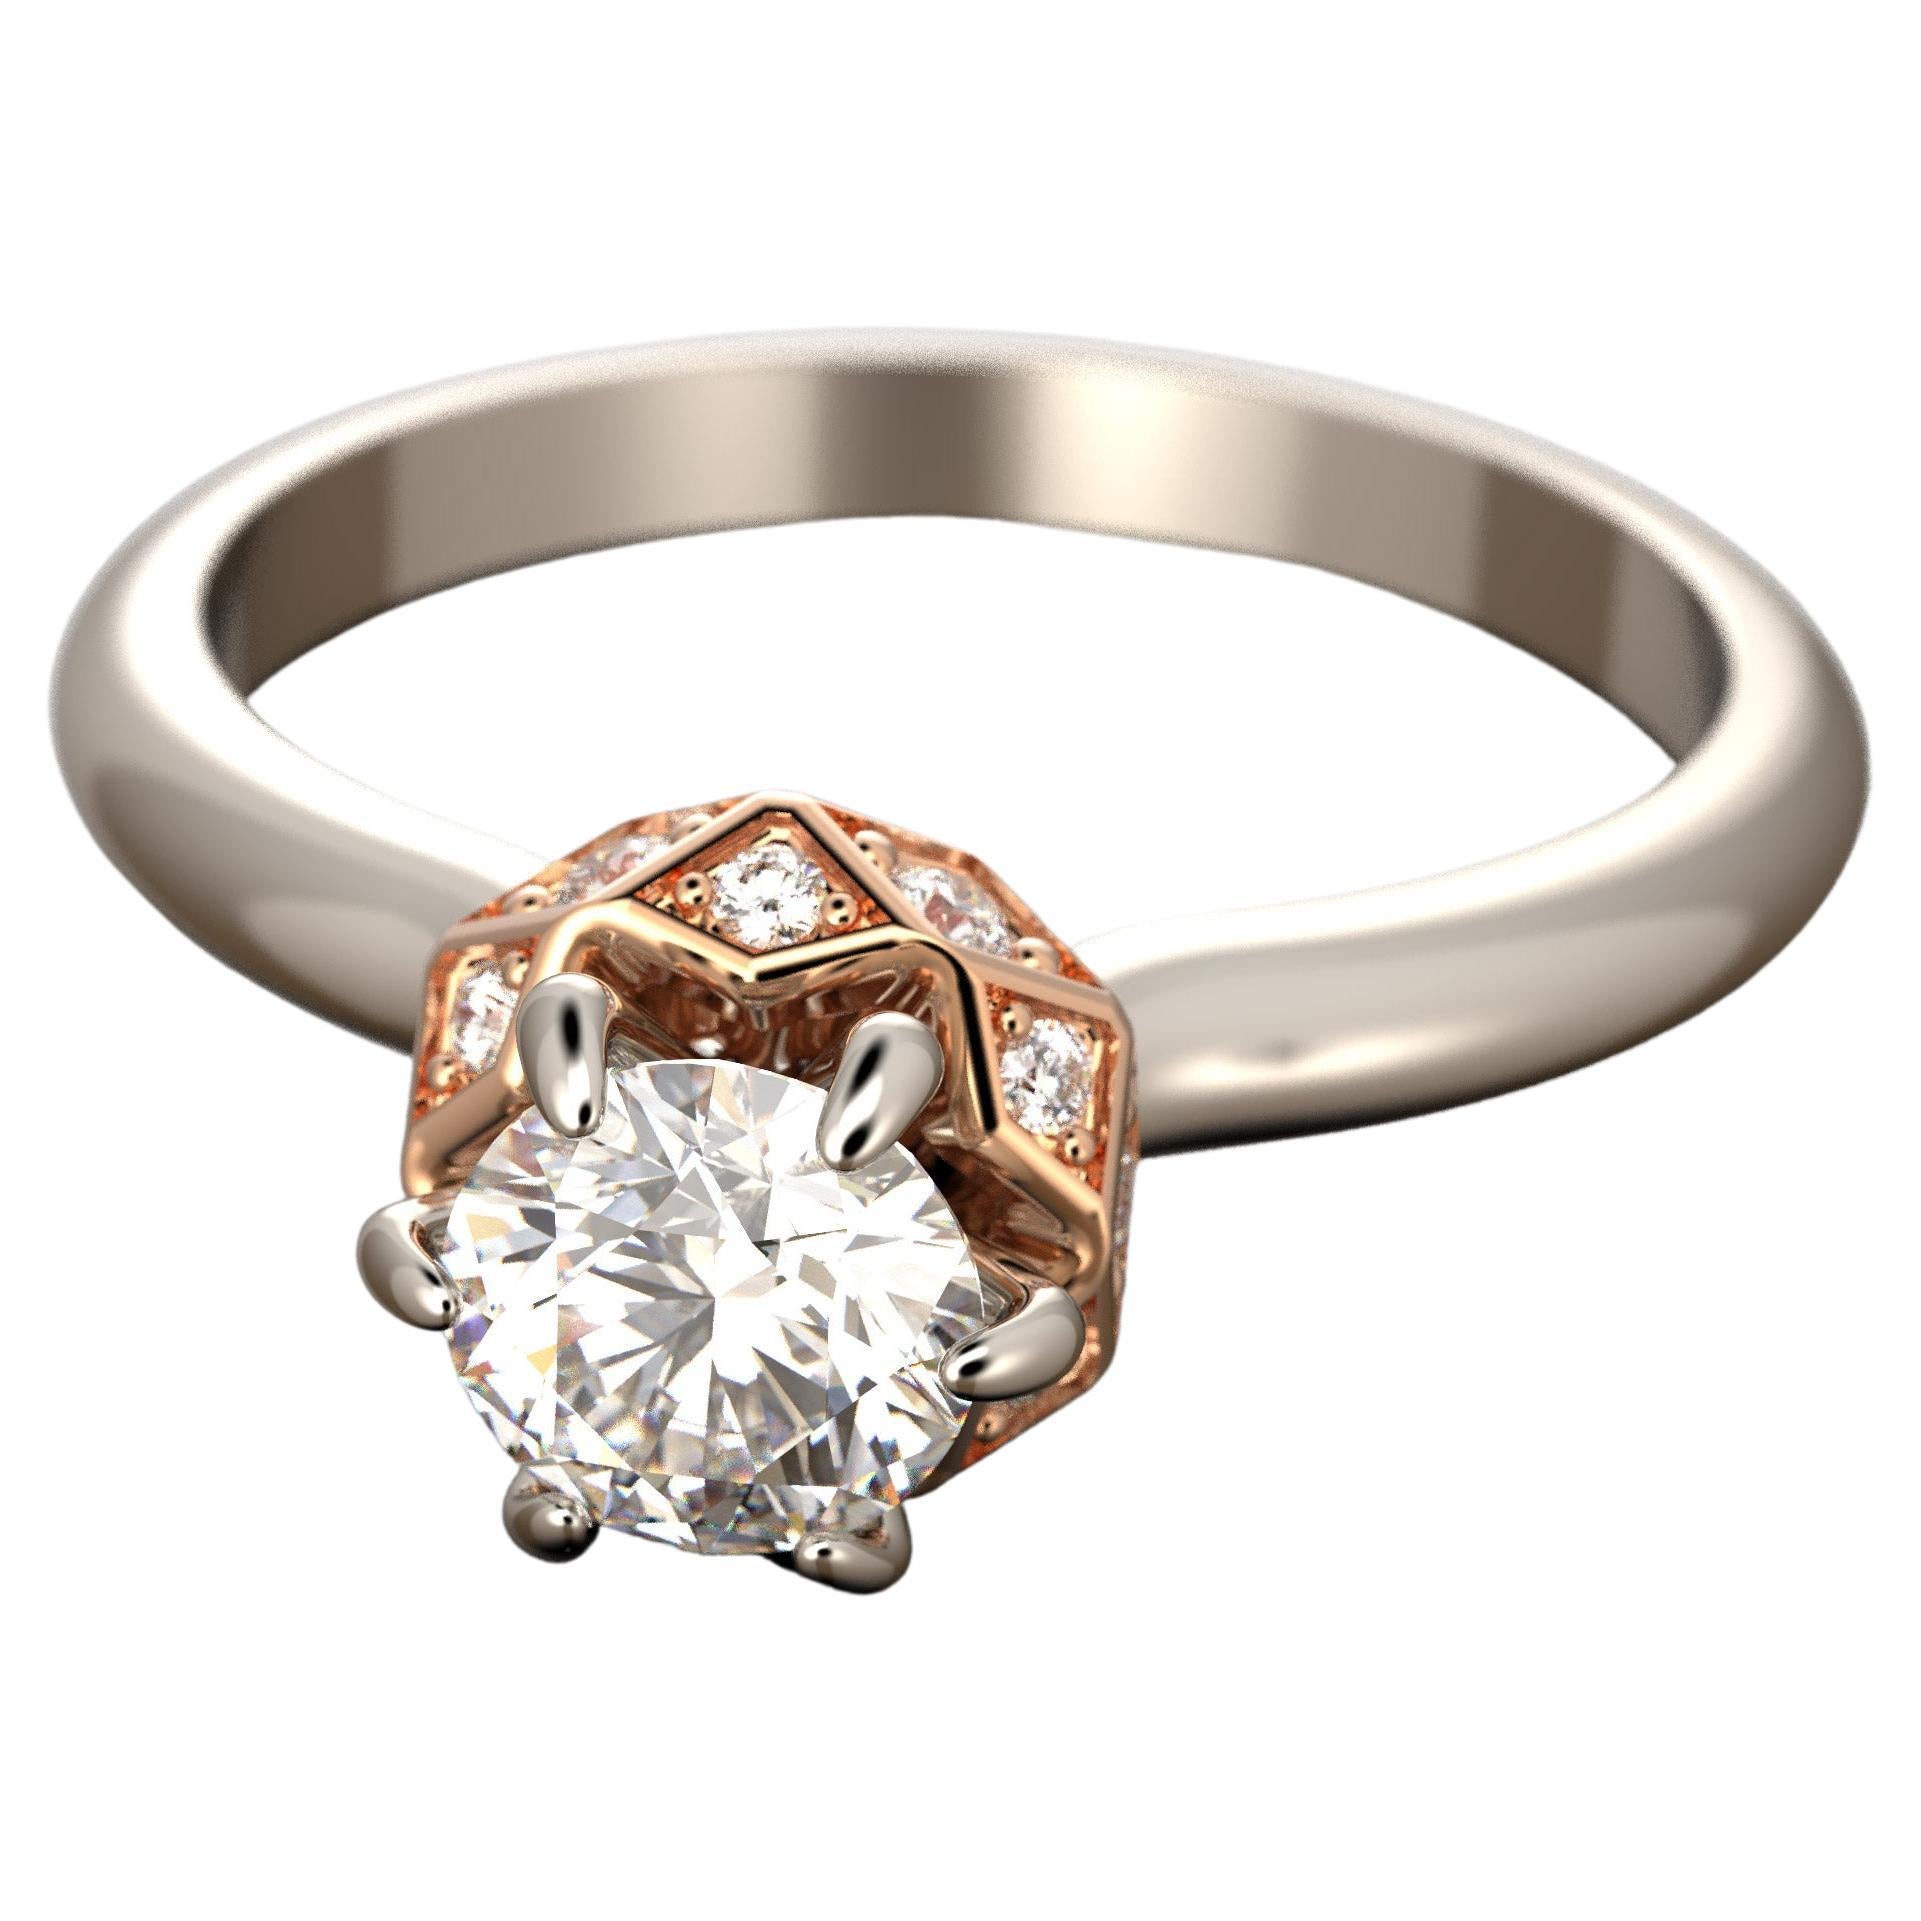 Verlobungsring mit Diamanten, hergestellt in Italien, GIA-zertifiziert 0,5 Karat Diamant